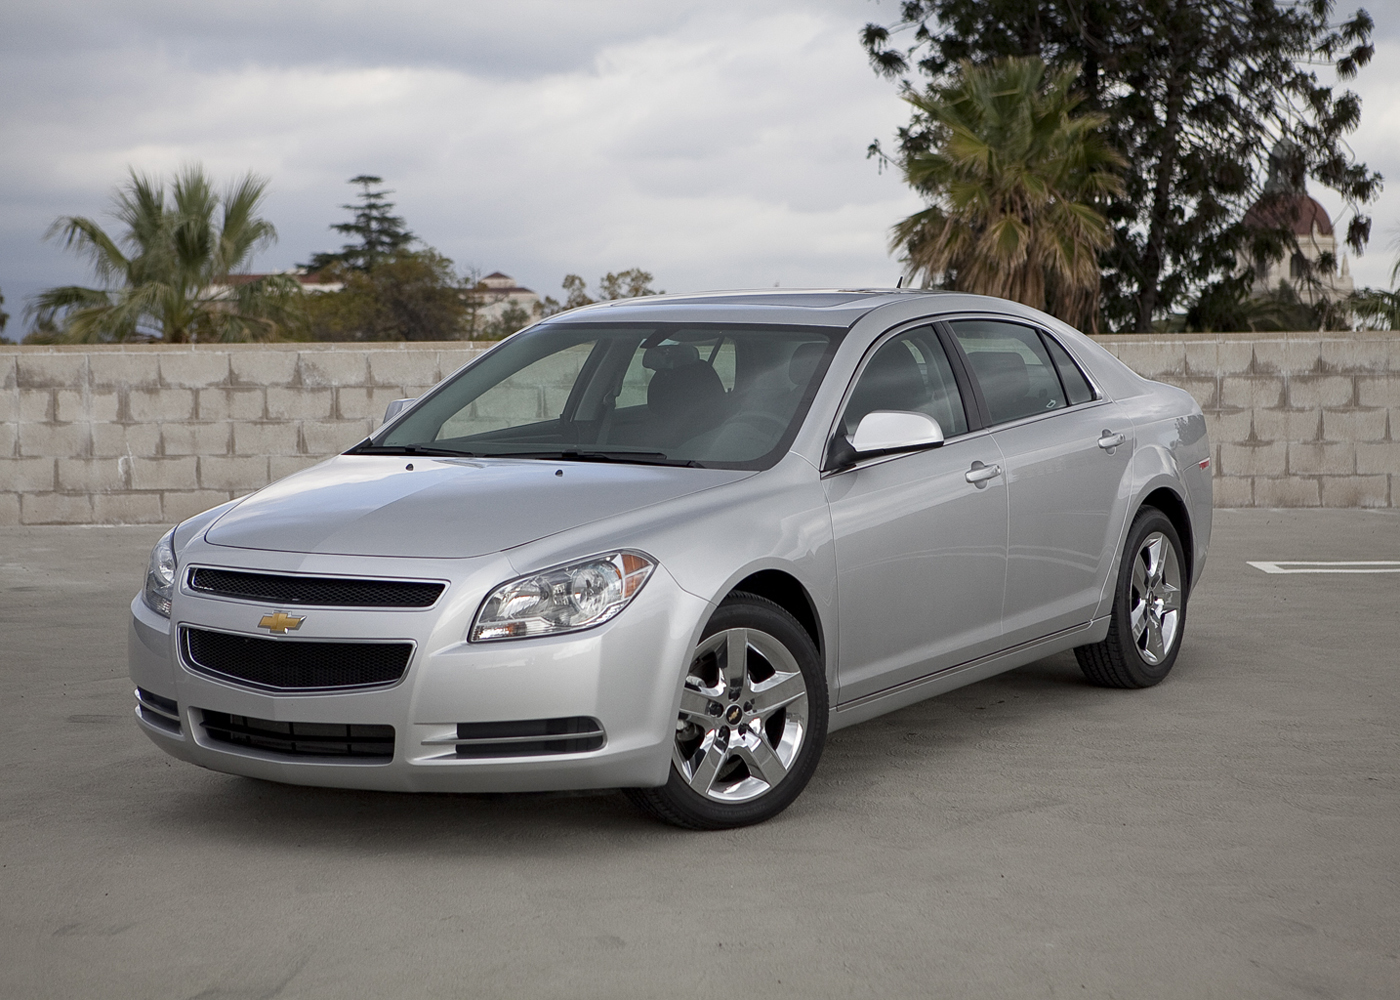 2010 Chevrolet Malibu Expert and Consumer Reviews on EasyAutoSales.com